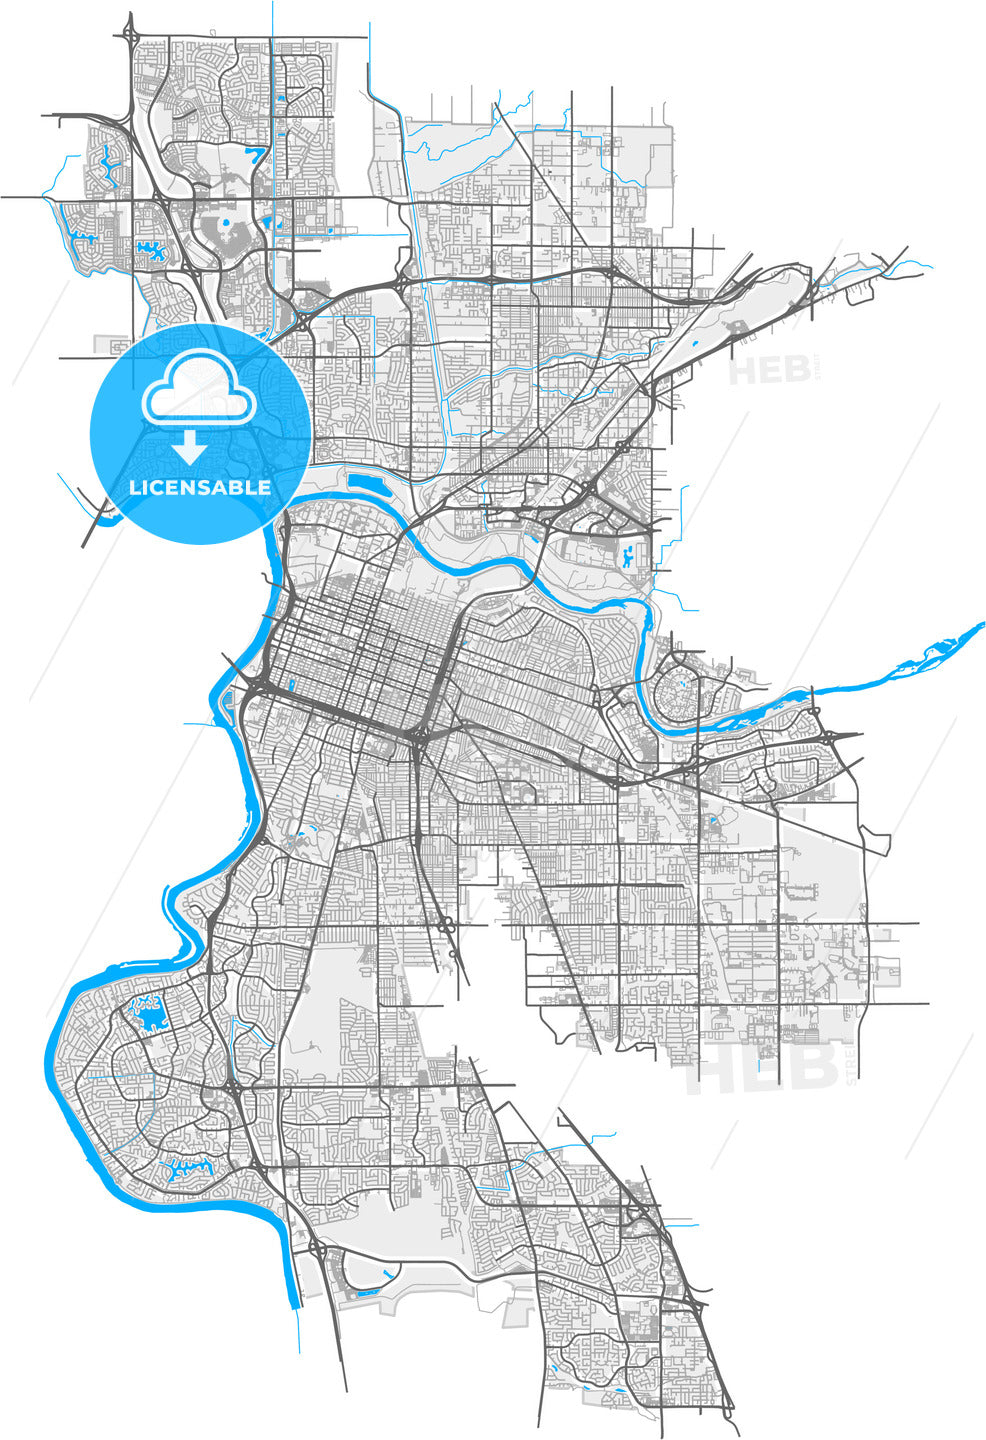 Sacramento, California, United States, high quality vector map